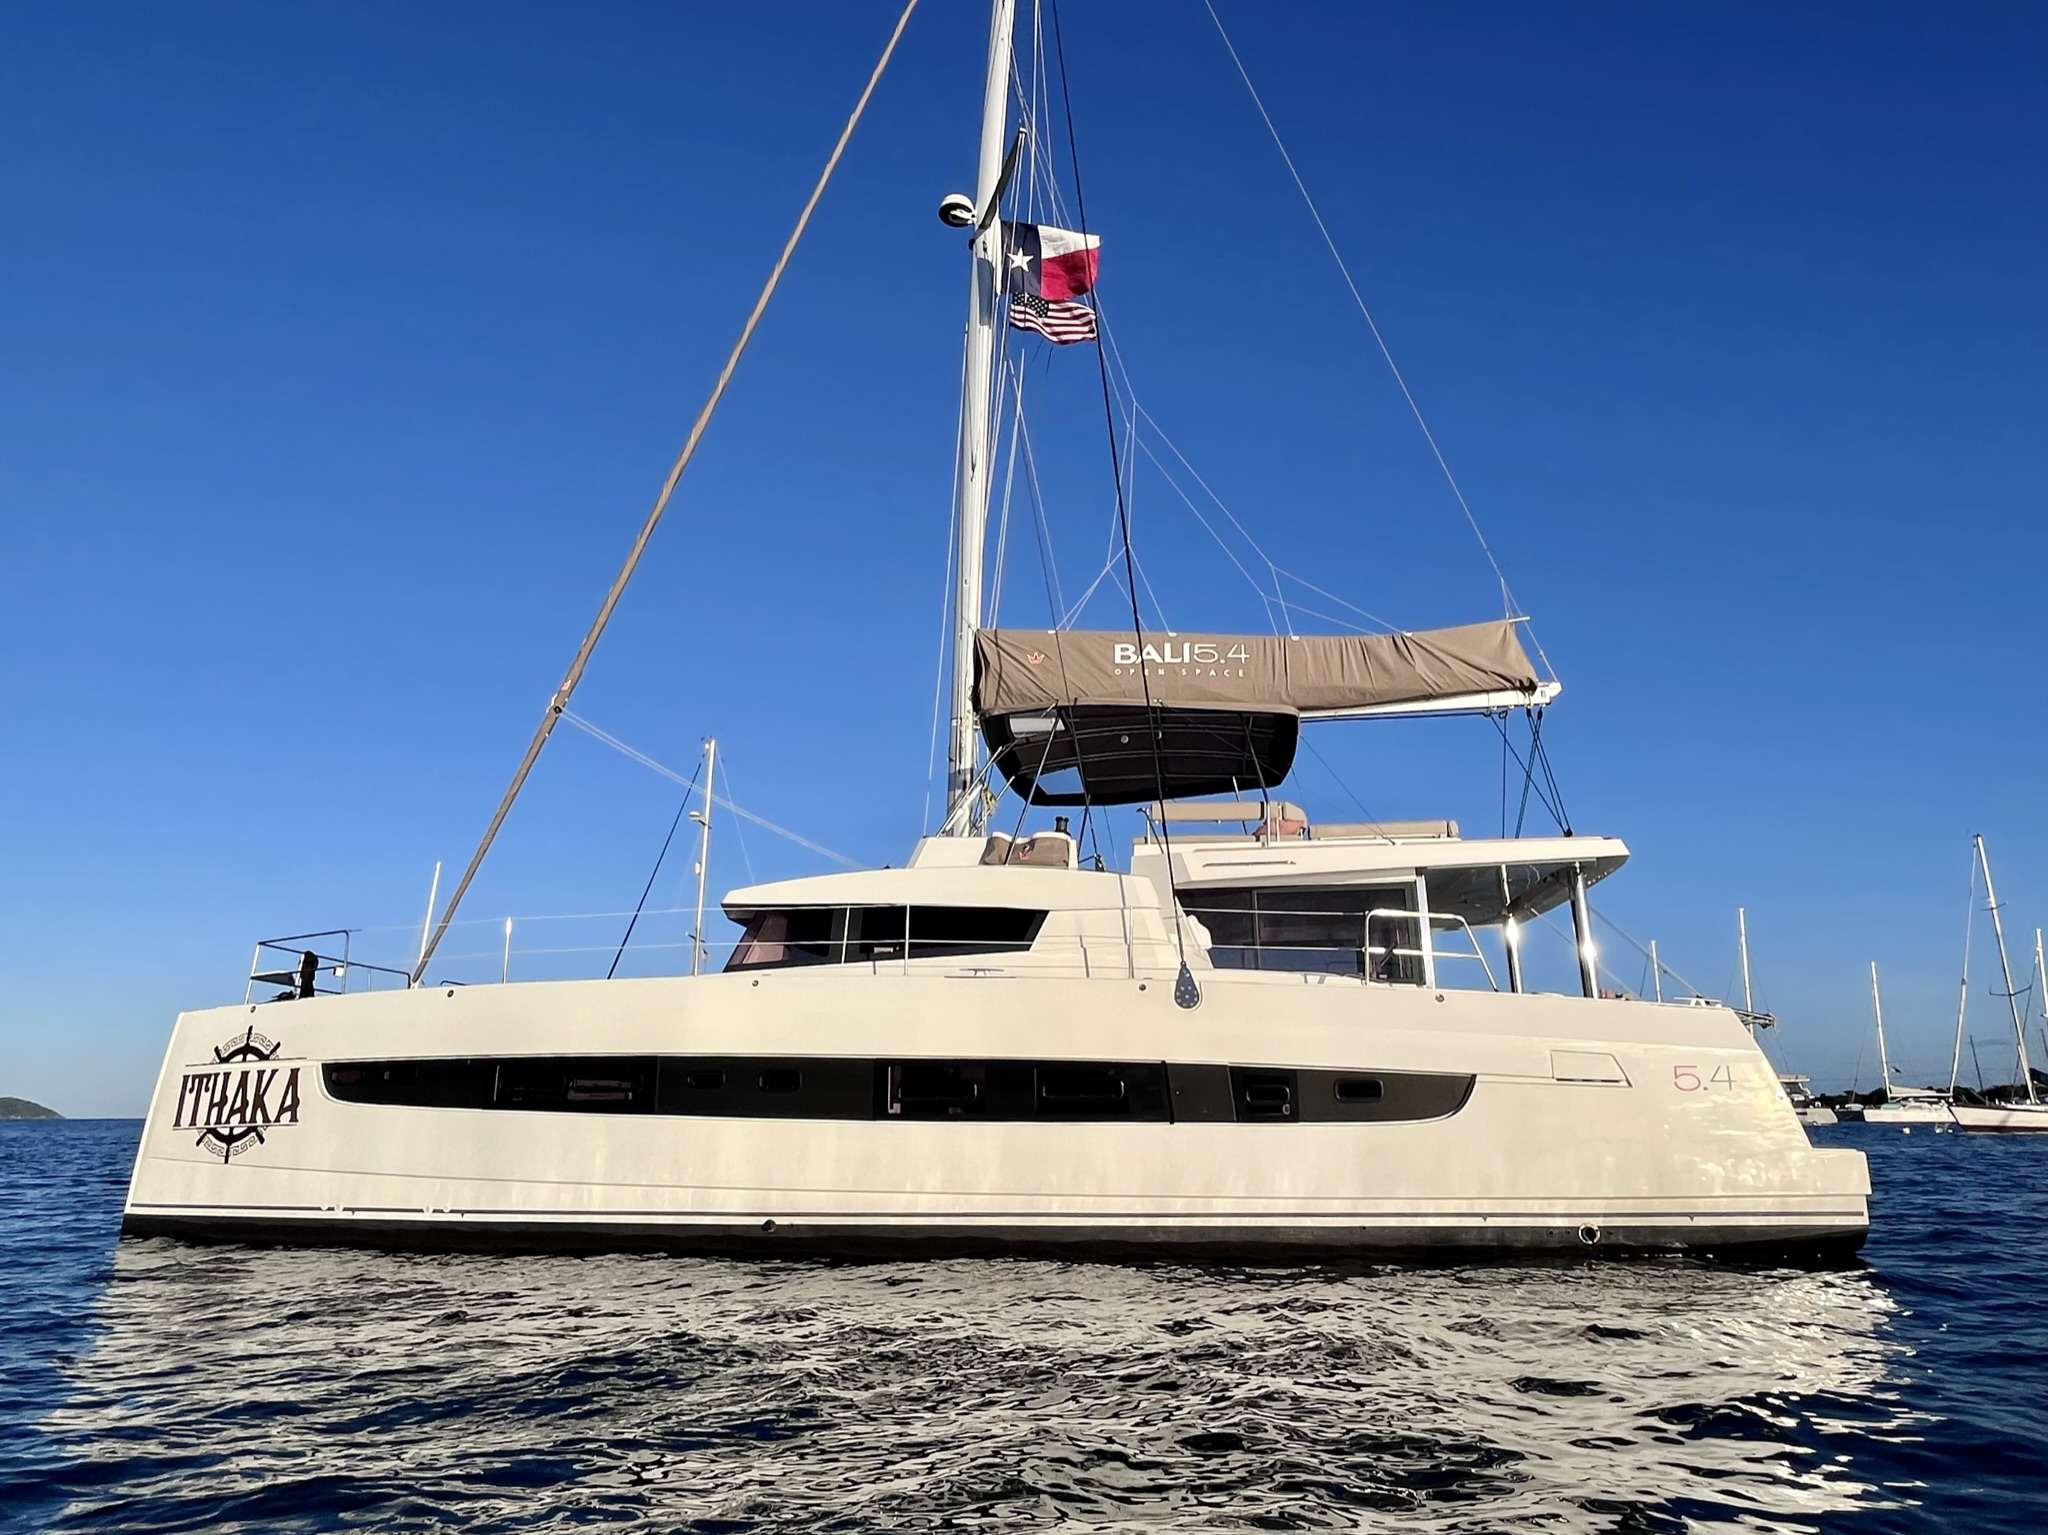 Ithaka Crewed Bali 5.4 Catamaran Charter Sailing the Virgin Islands.